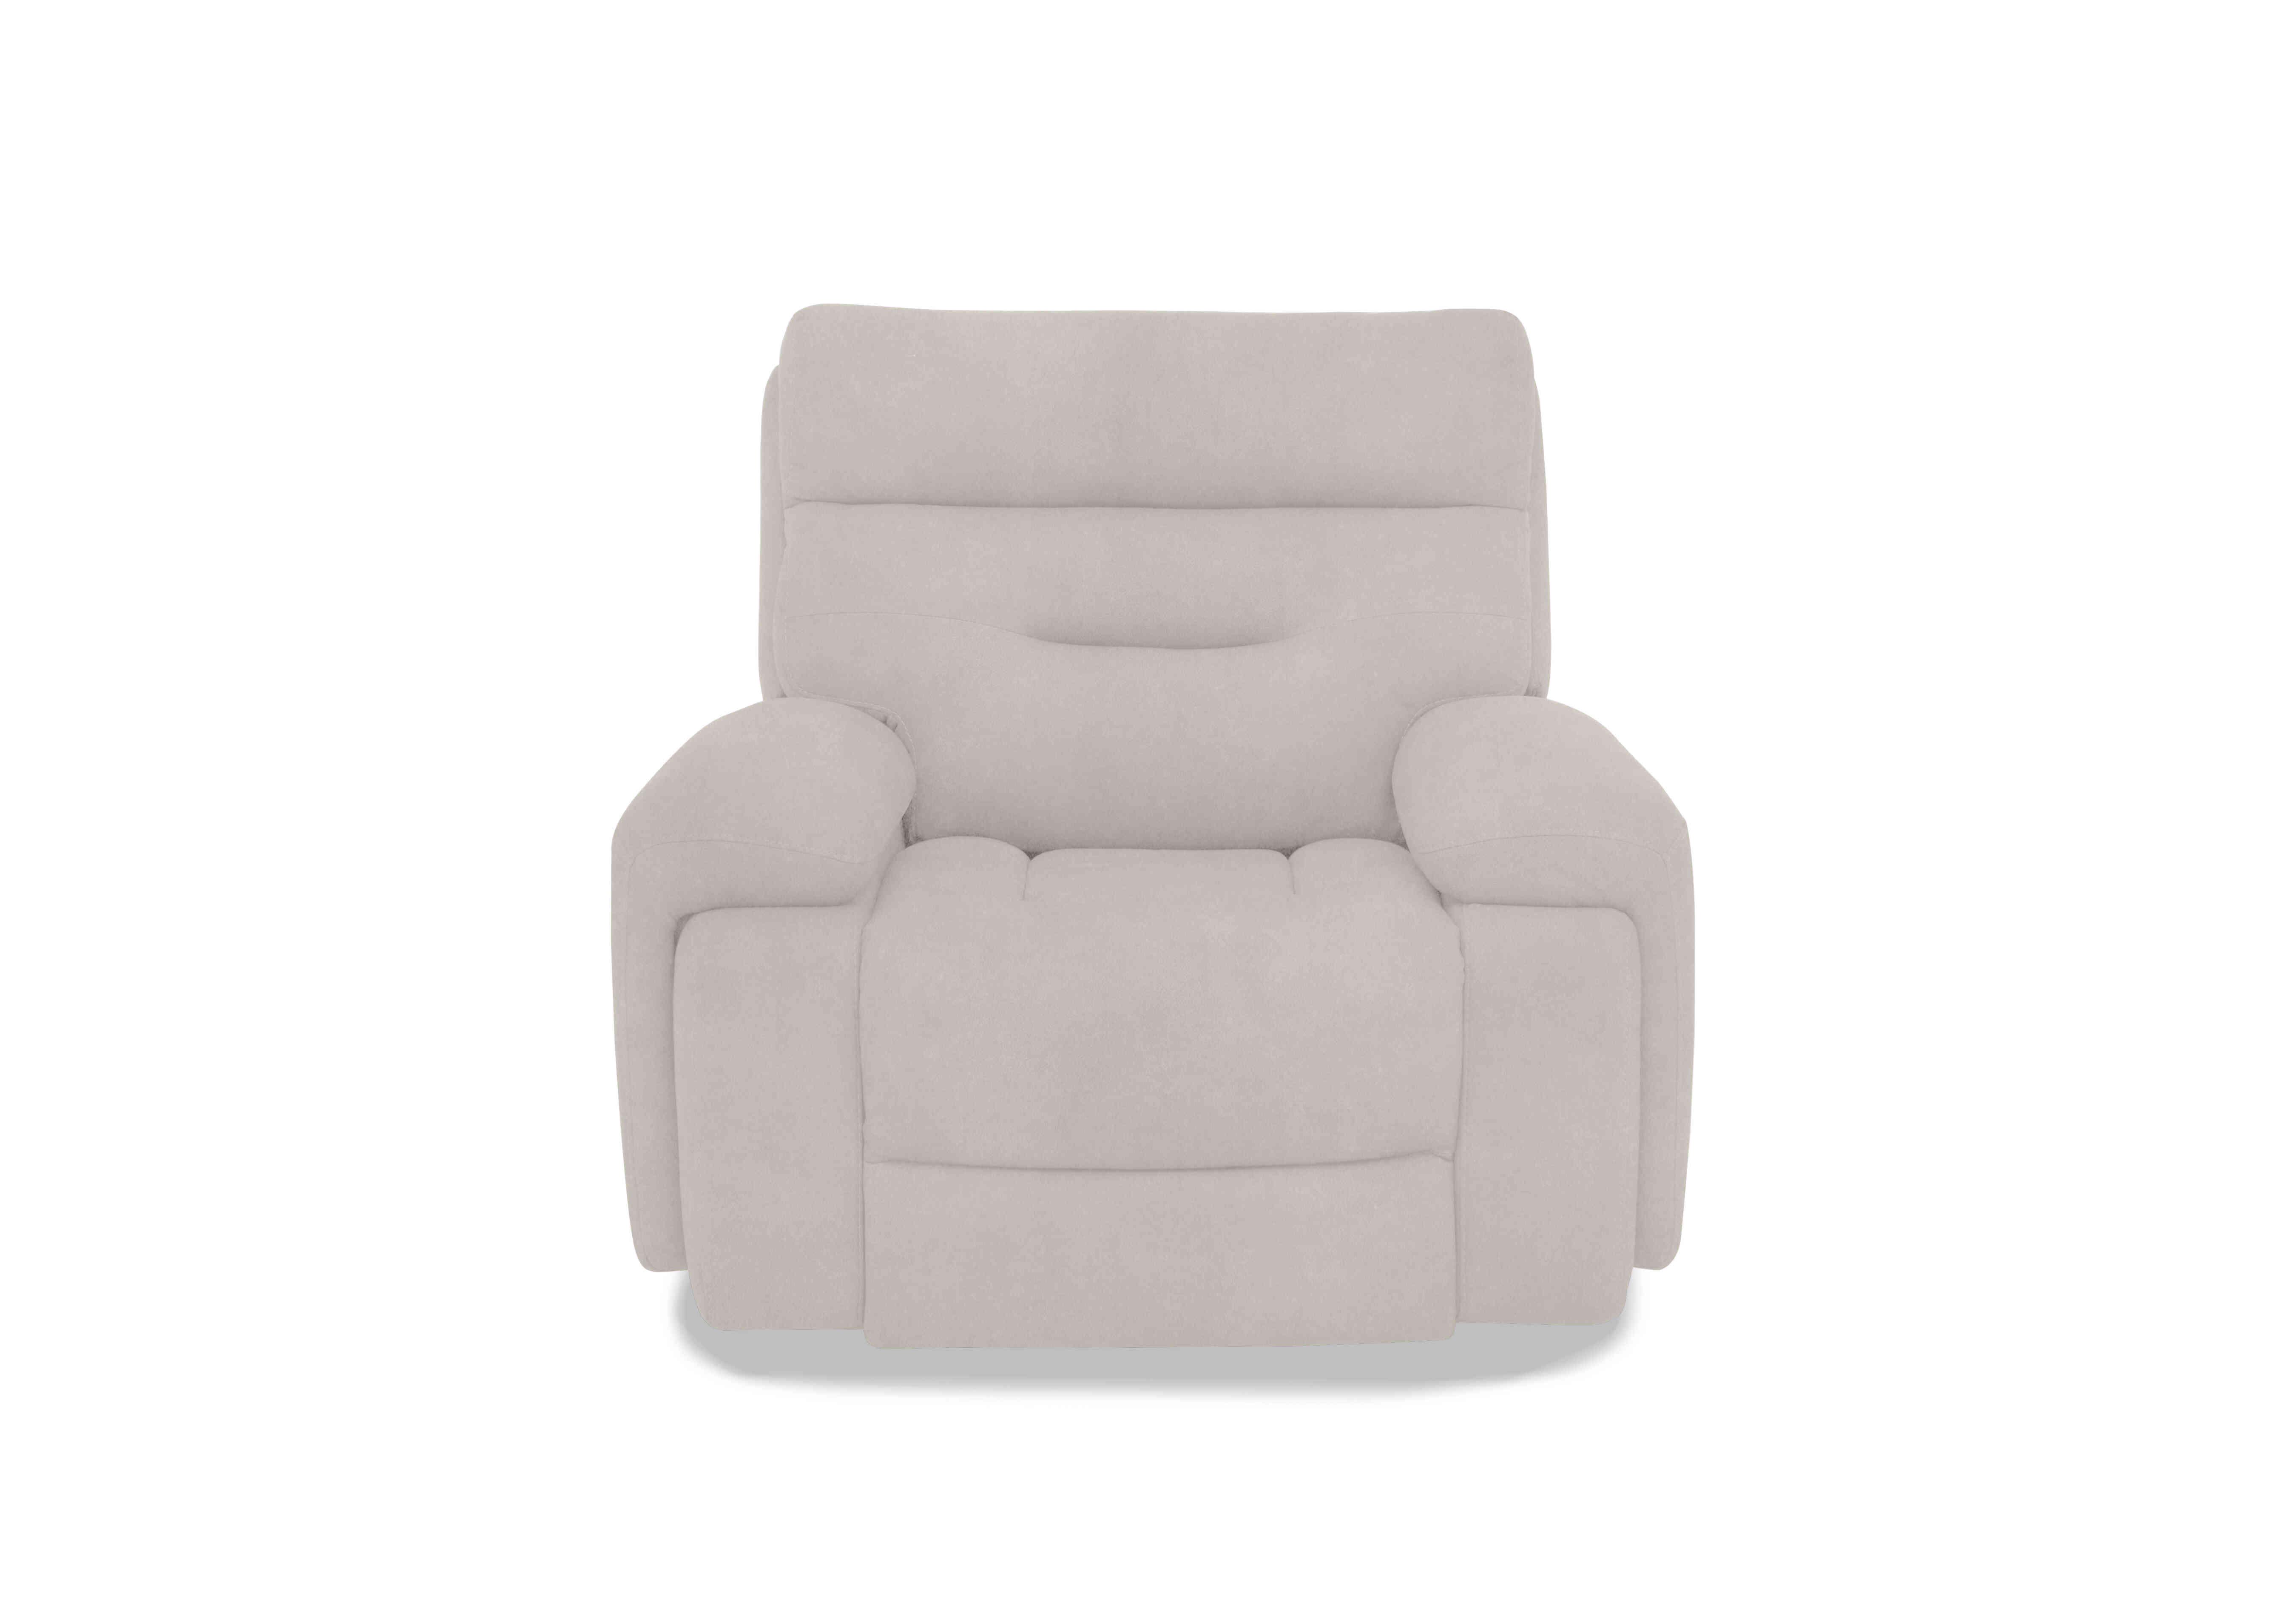 Cinemax Fabric Chair in Vv-0307 Velvet White on Furniture Village